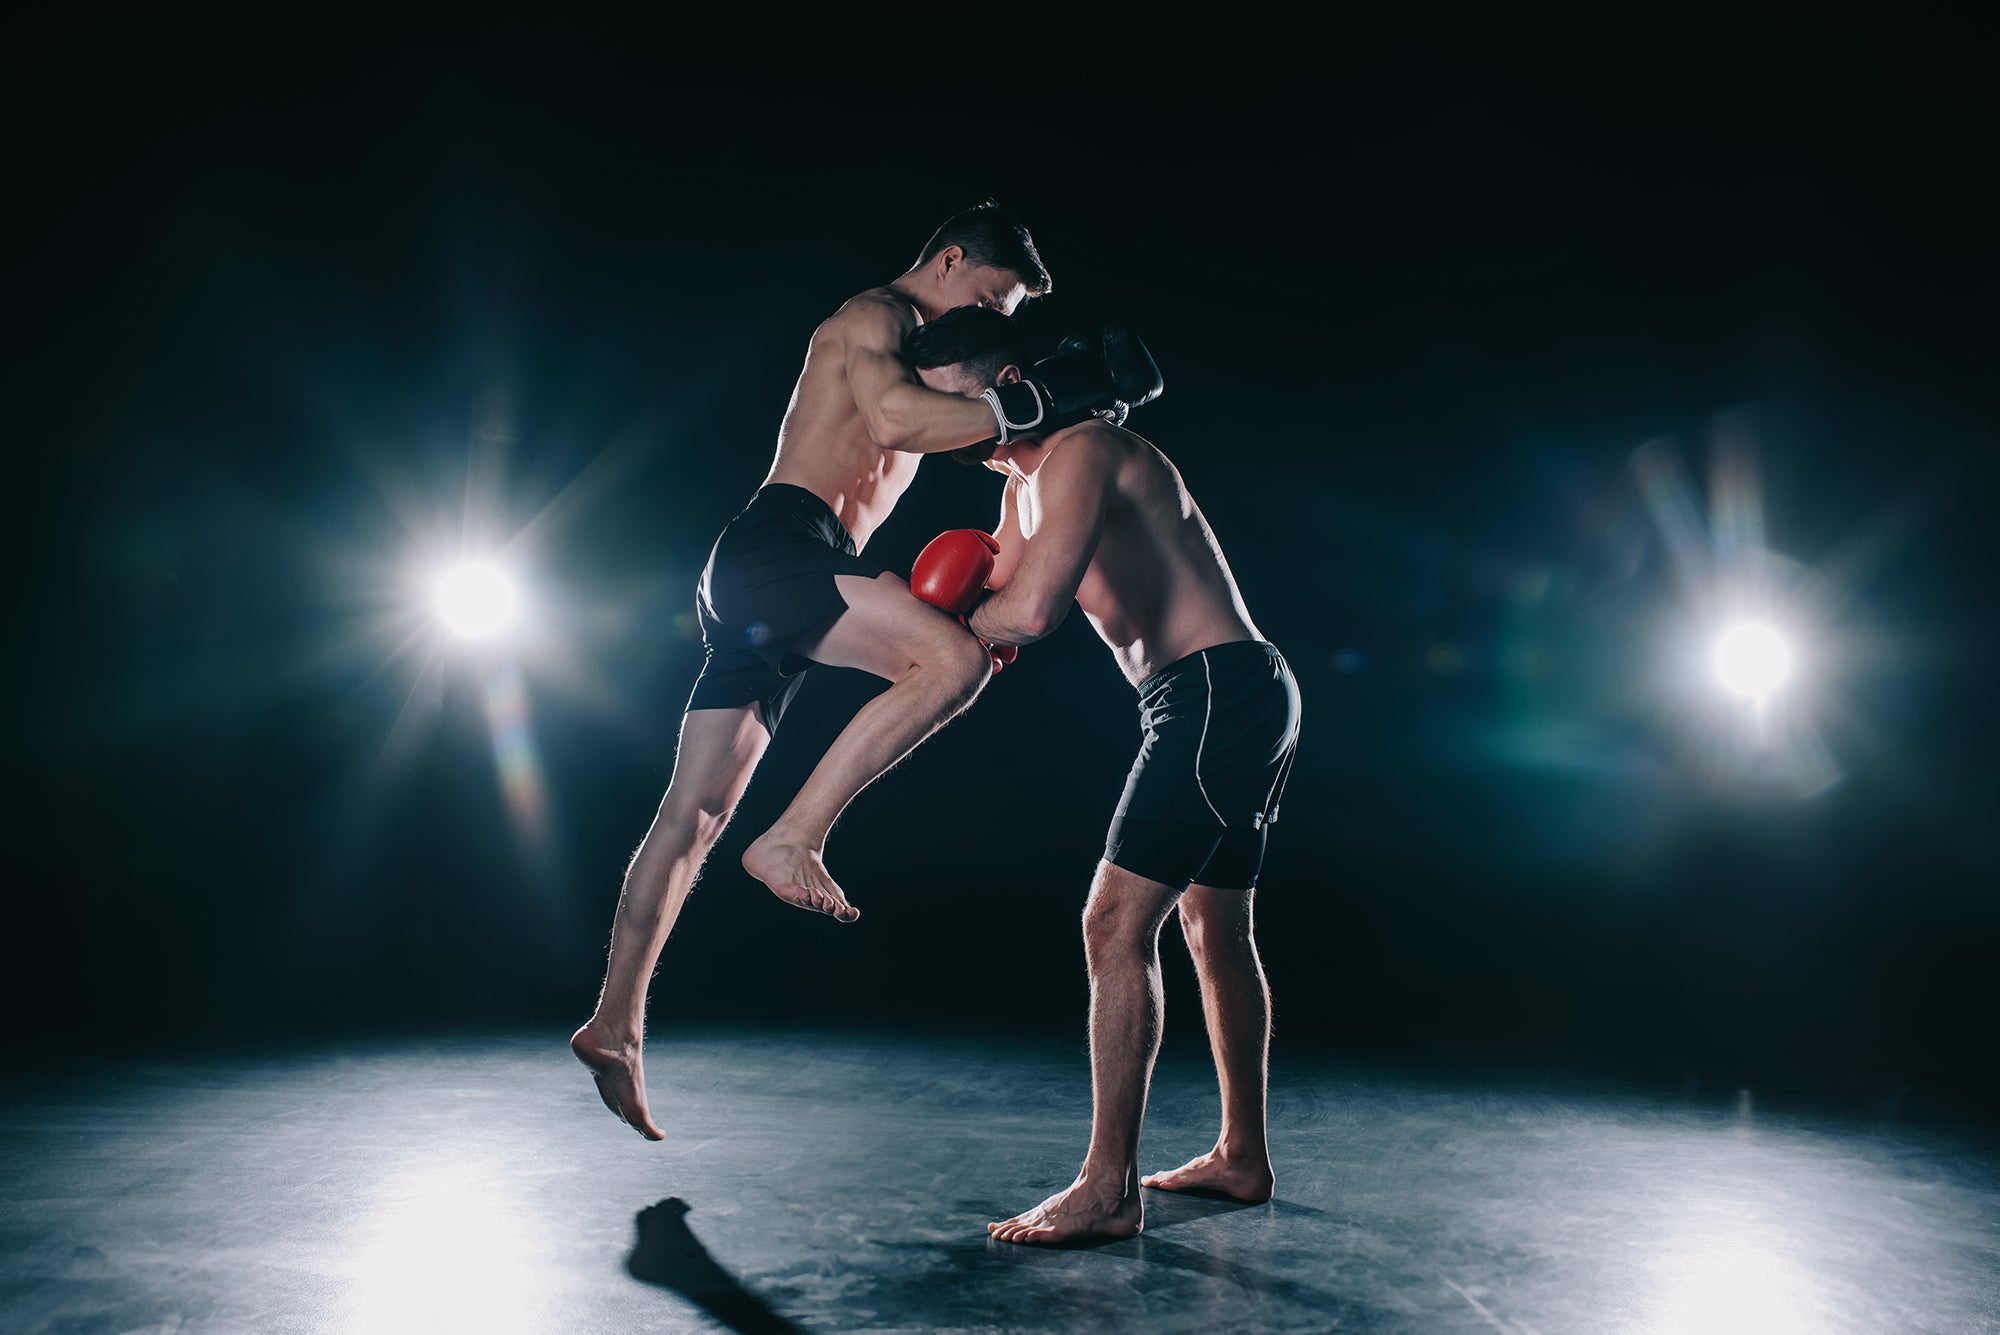 Why do MMA fighters do calisthenics?